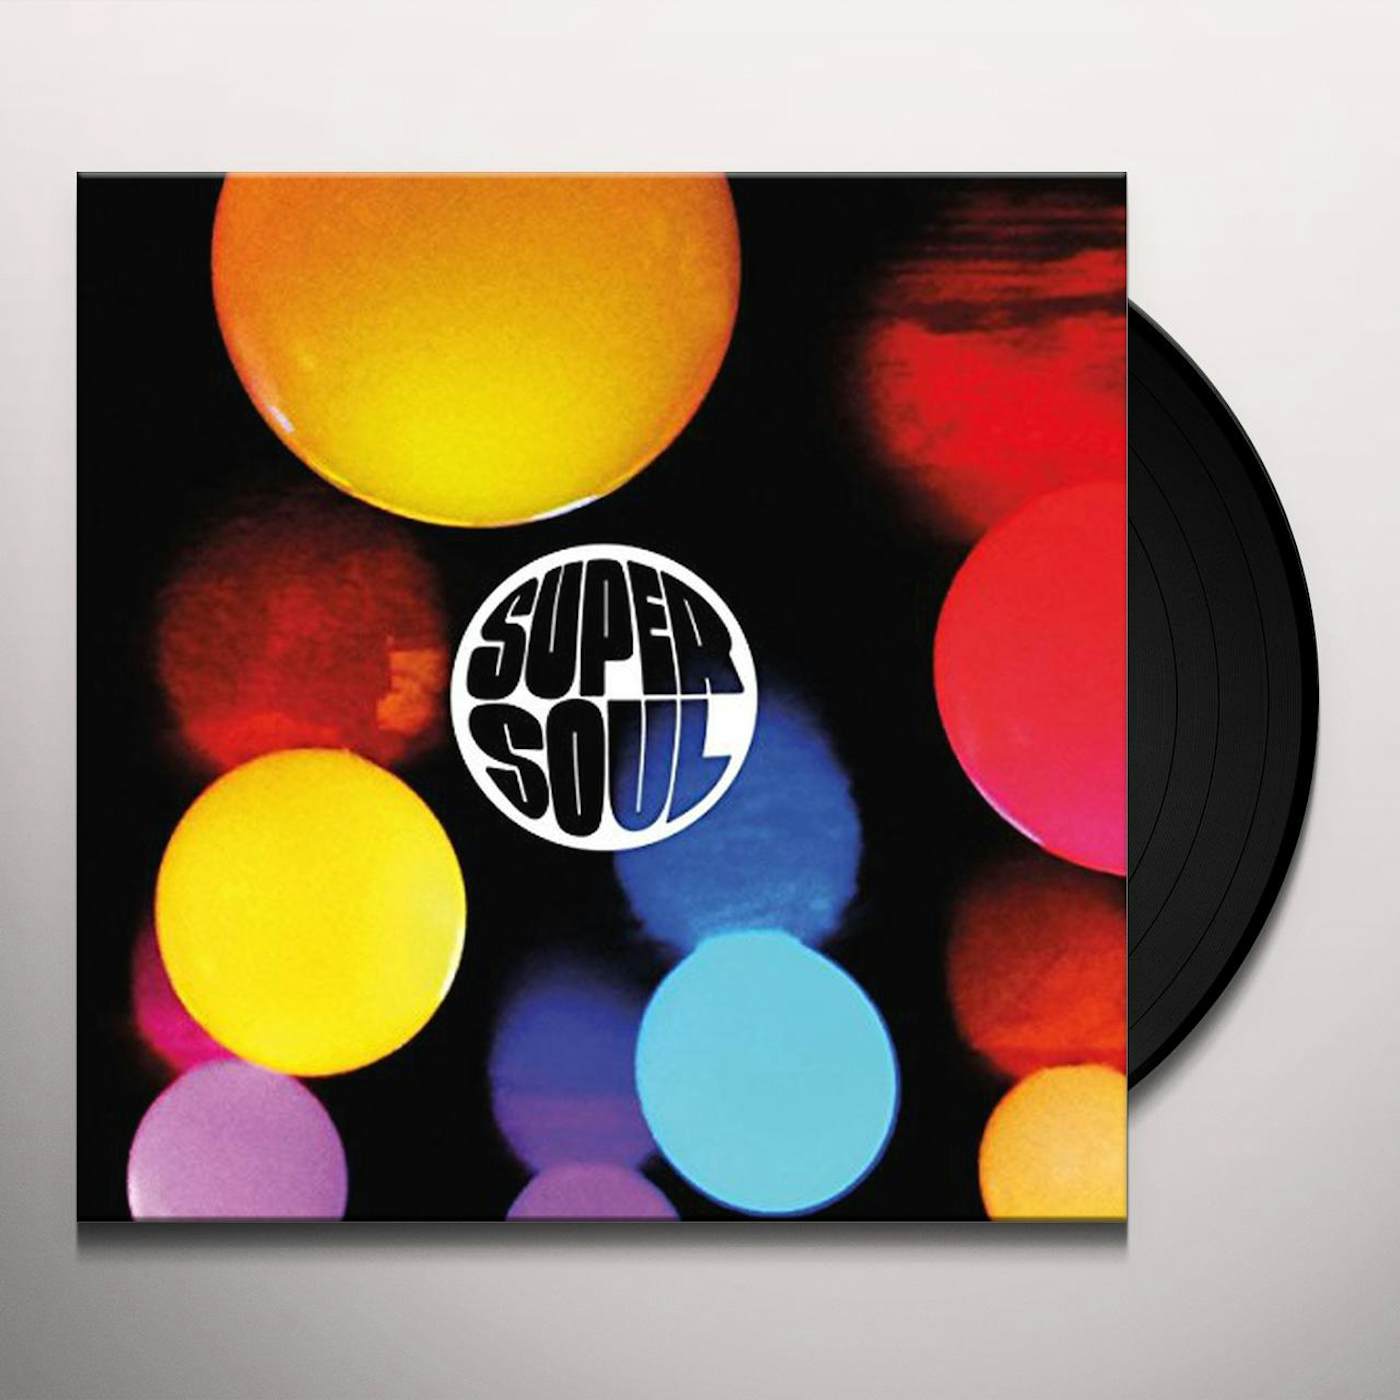 Supersoul Vinyl Record